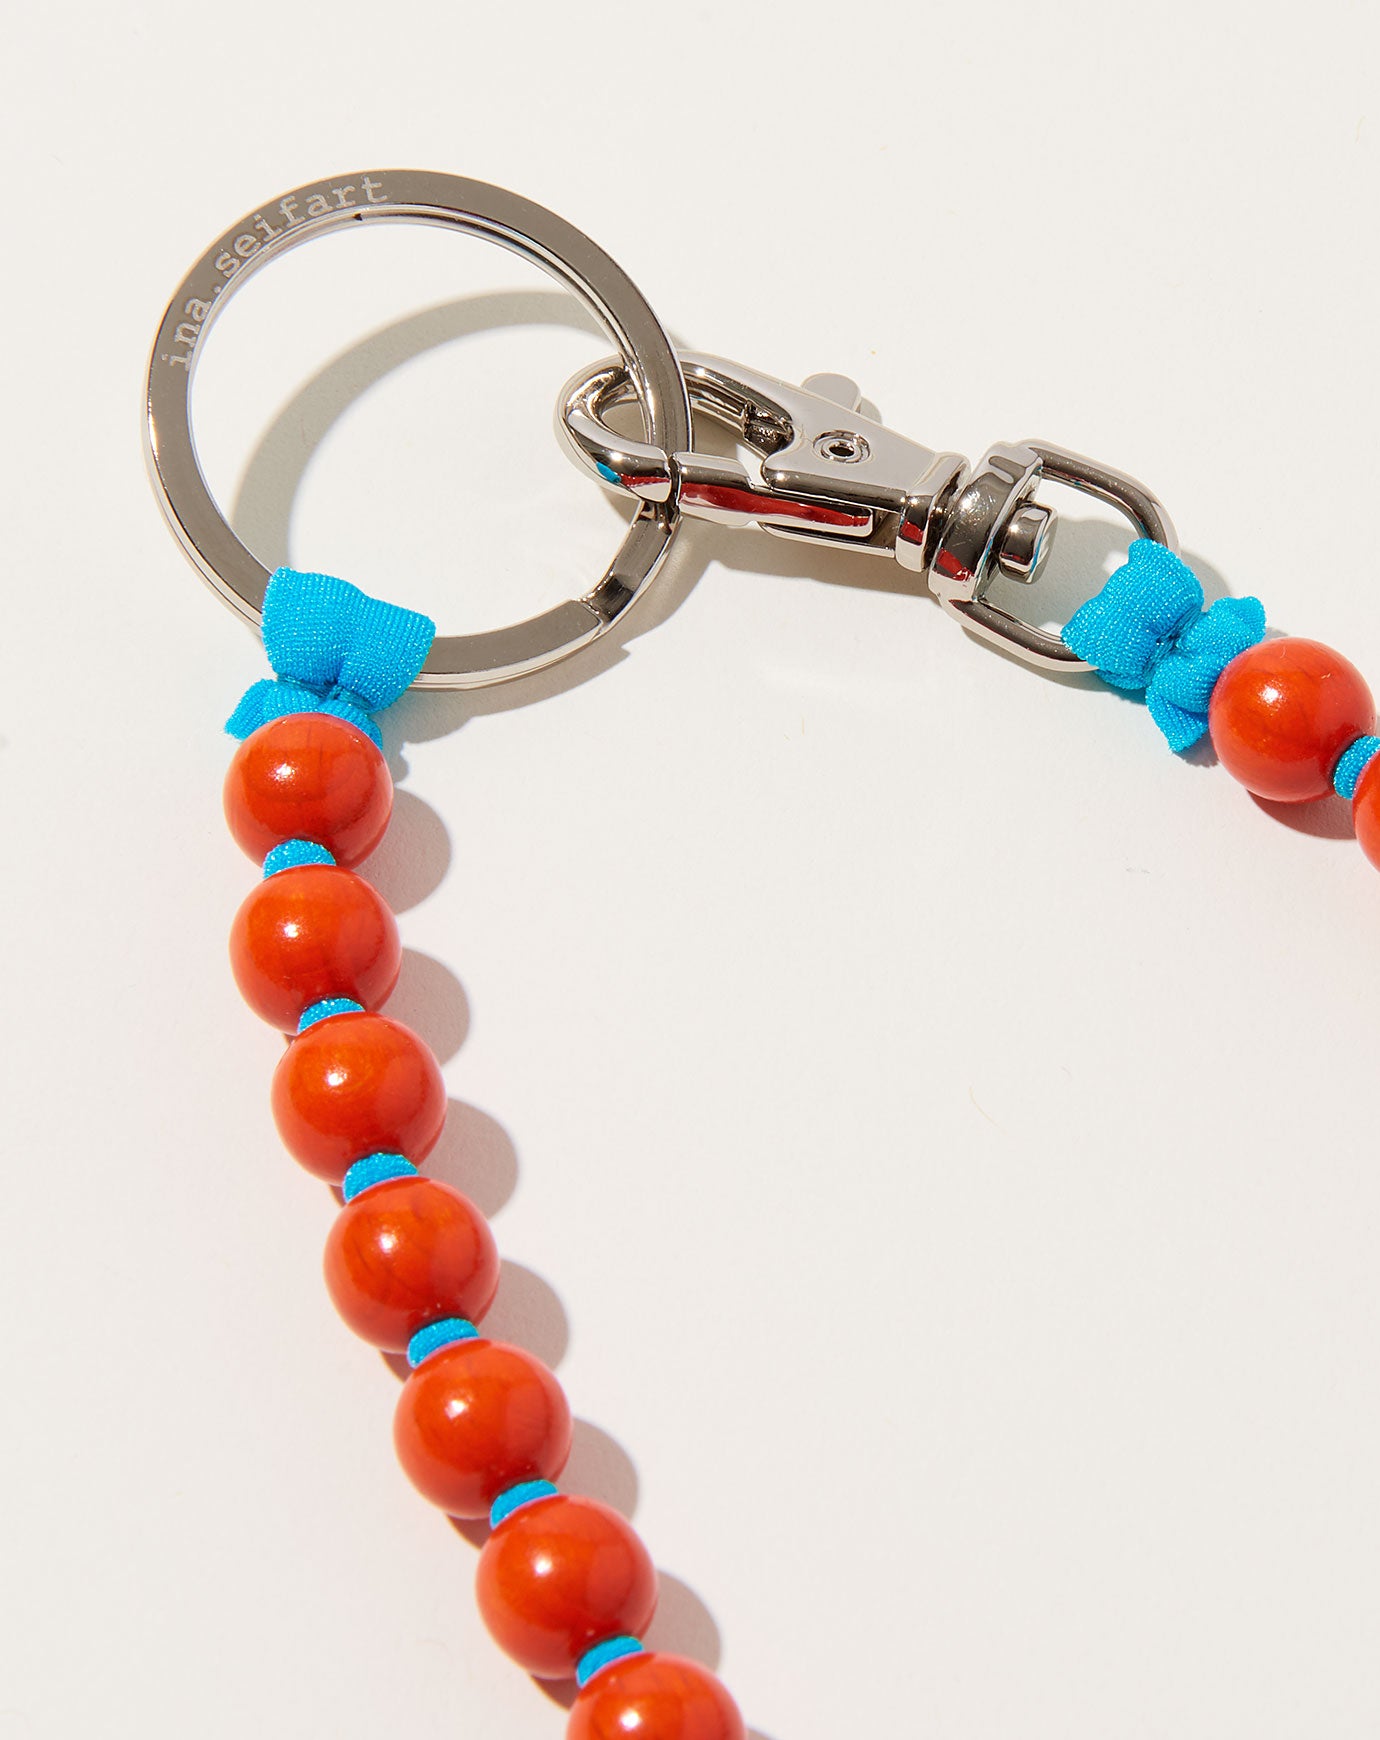 Ina Seifart Perlen Long Keyholder in Orange on Turquoise